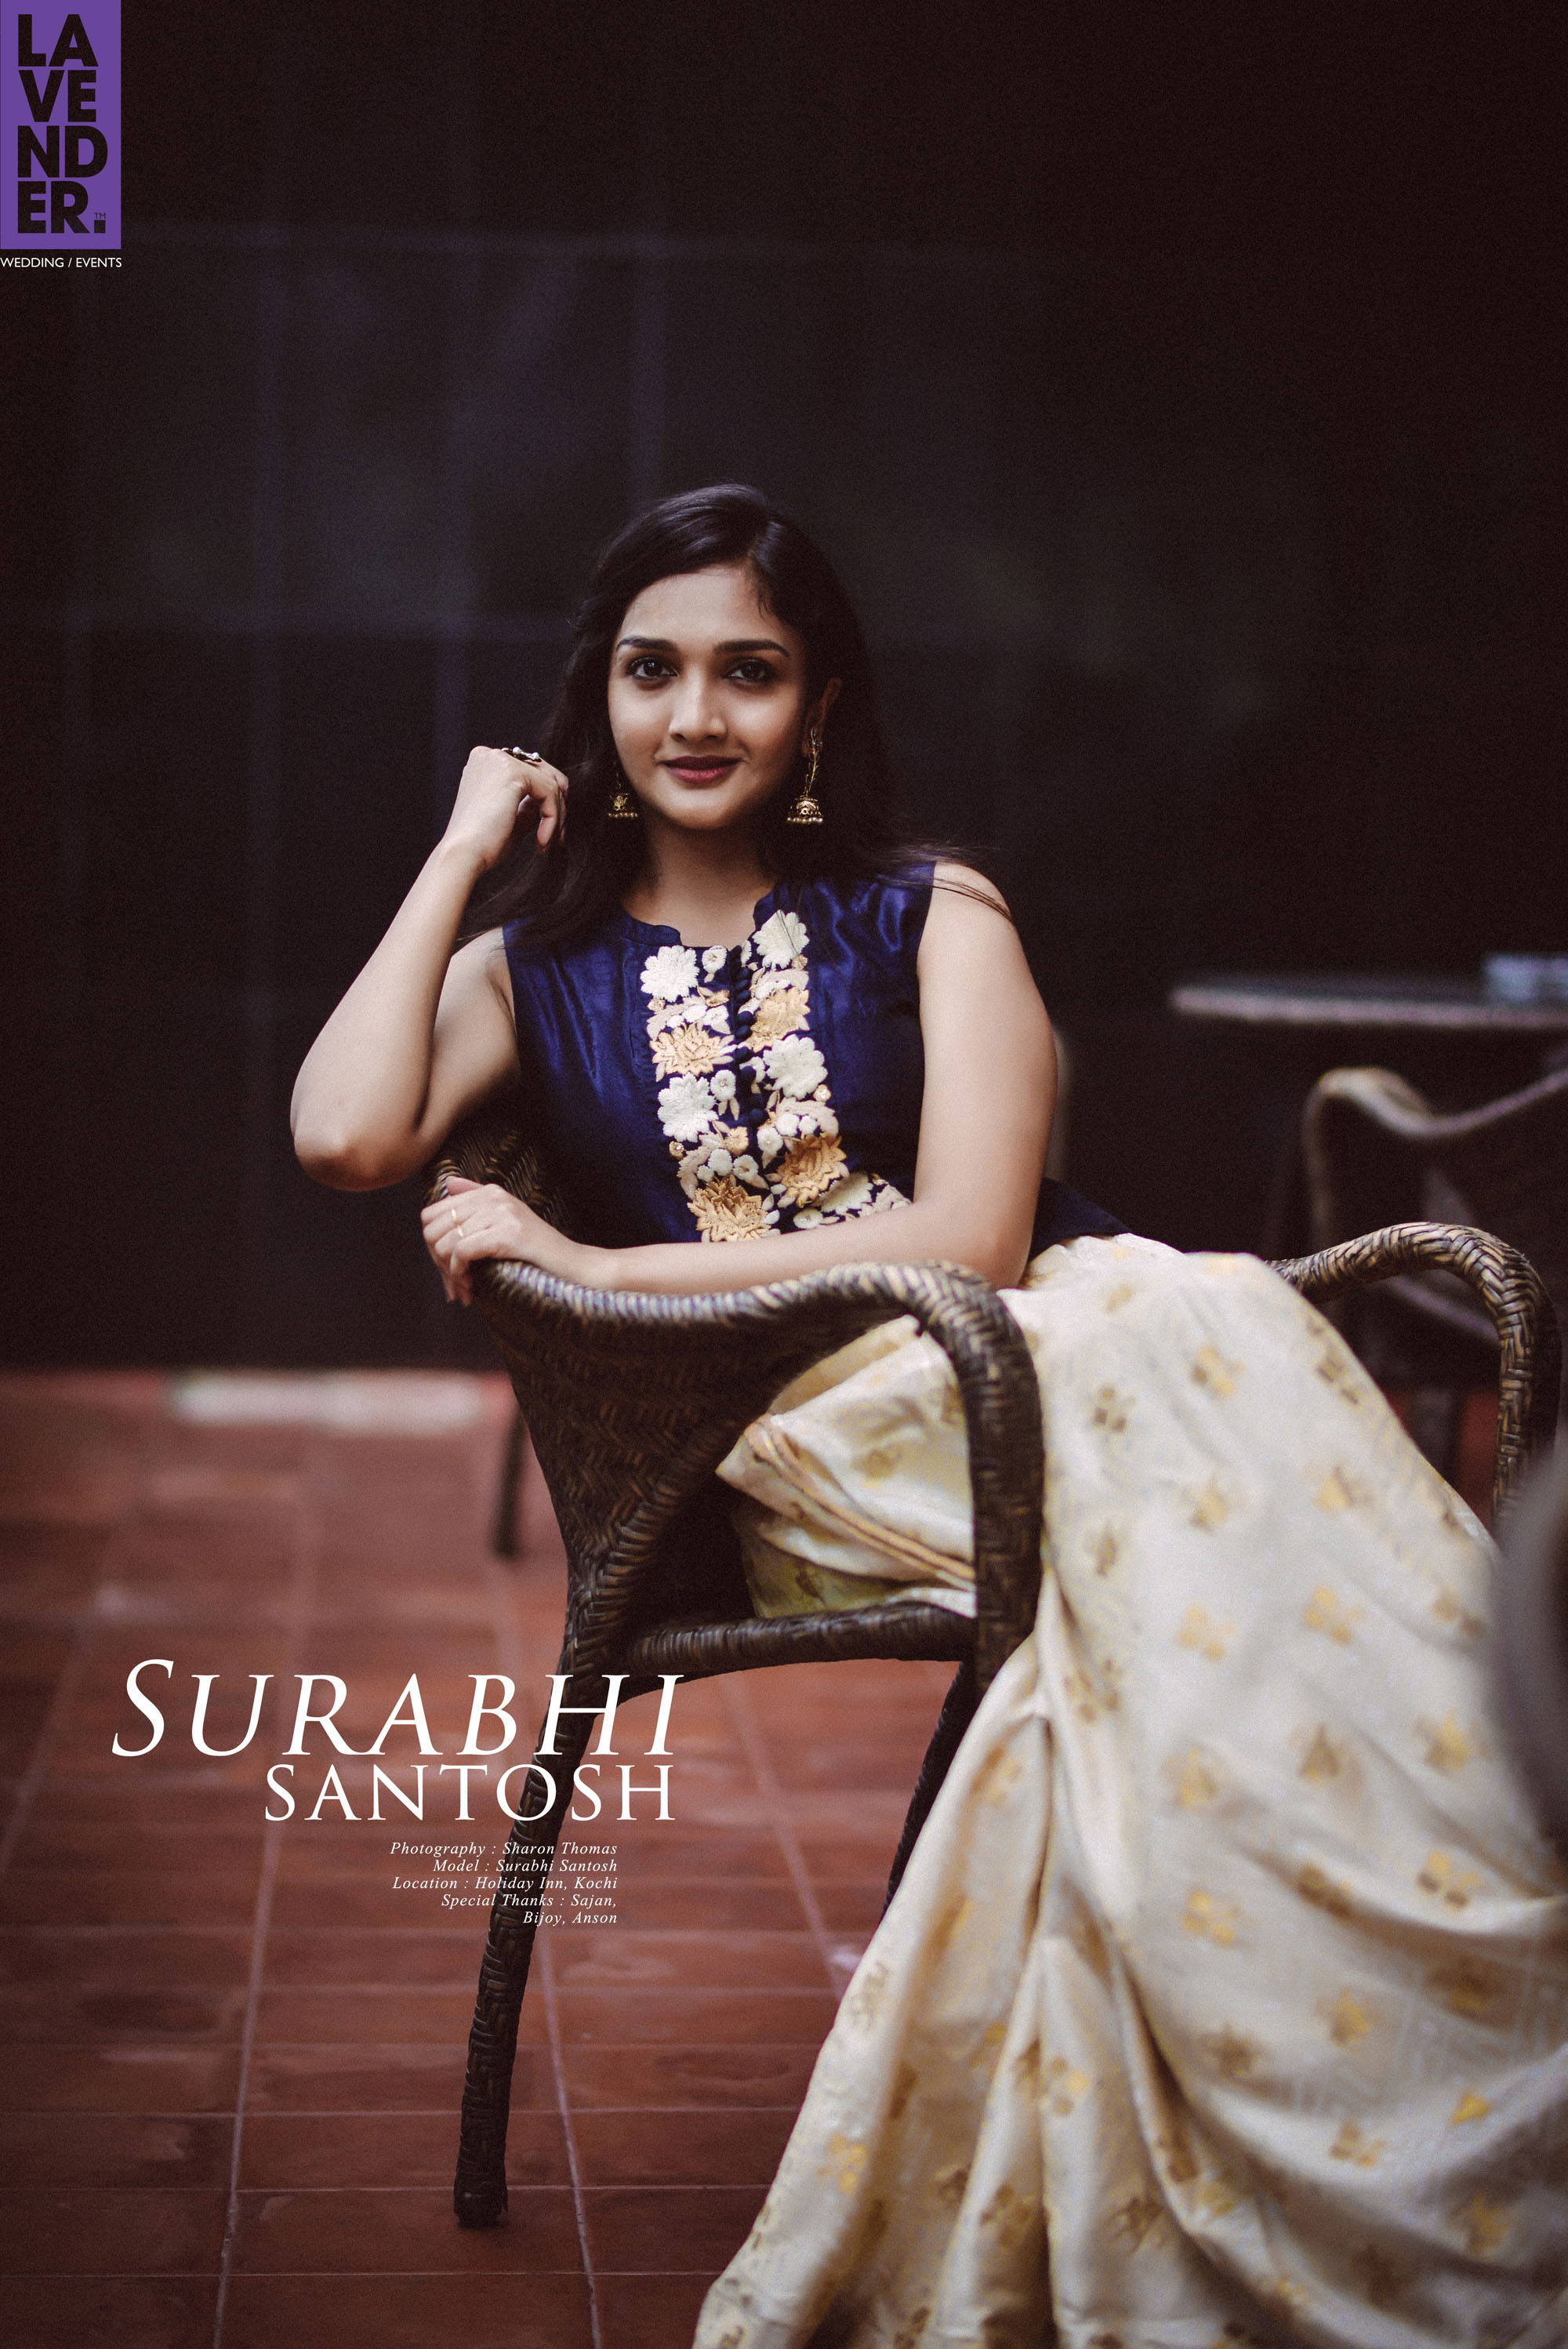 surabhi santosh ,surabhi santosh new stills ,actress surabhi santosh photoshoot ,surabhi santosh photos ,suraphi santosh stills images ,lavender wedding shoot ,lavender actress shoot